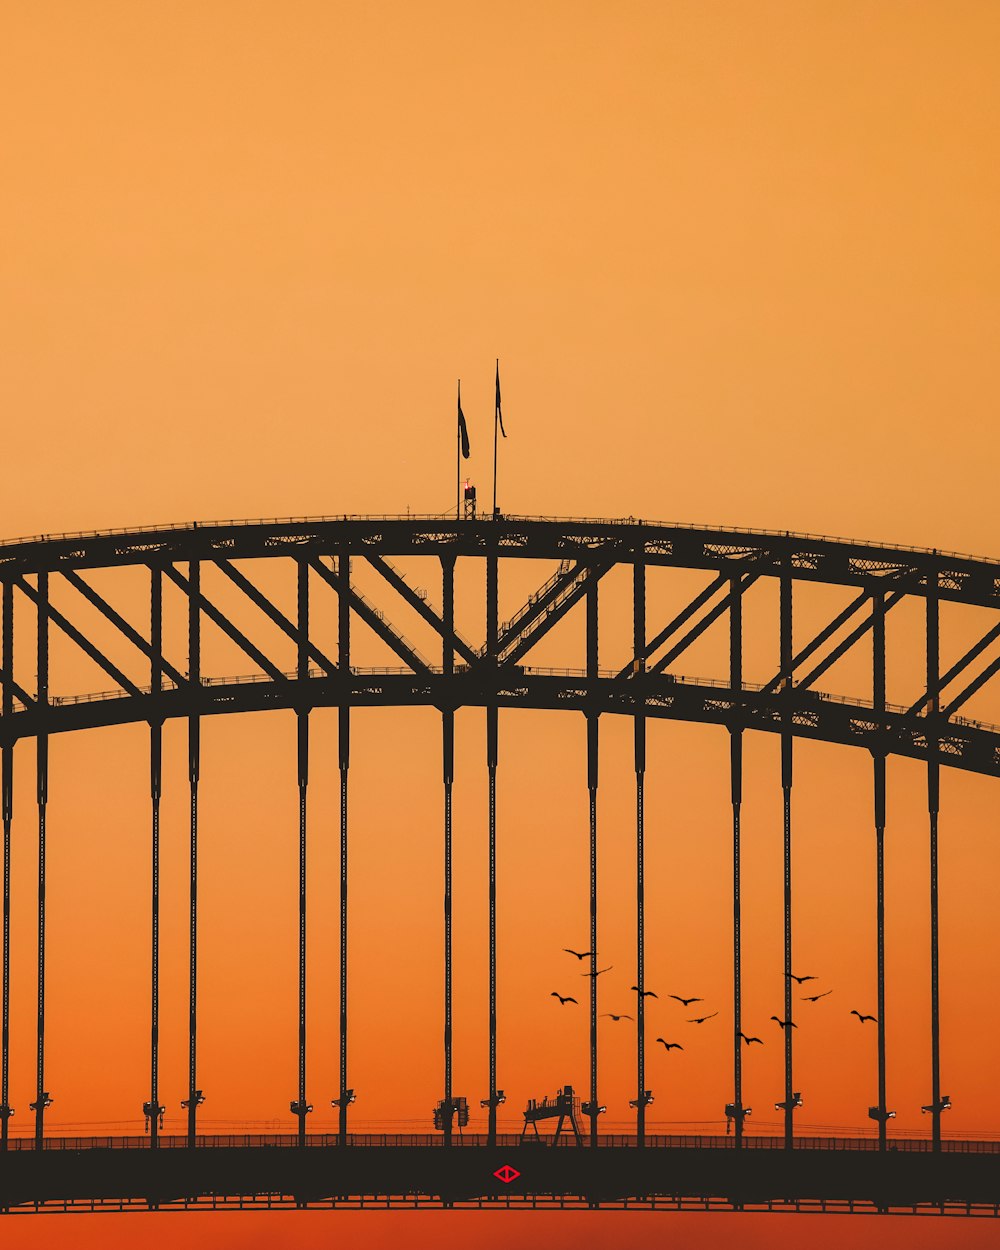 Silhouette der Brücke bei Sonnenuntergang